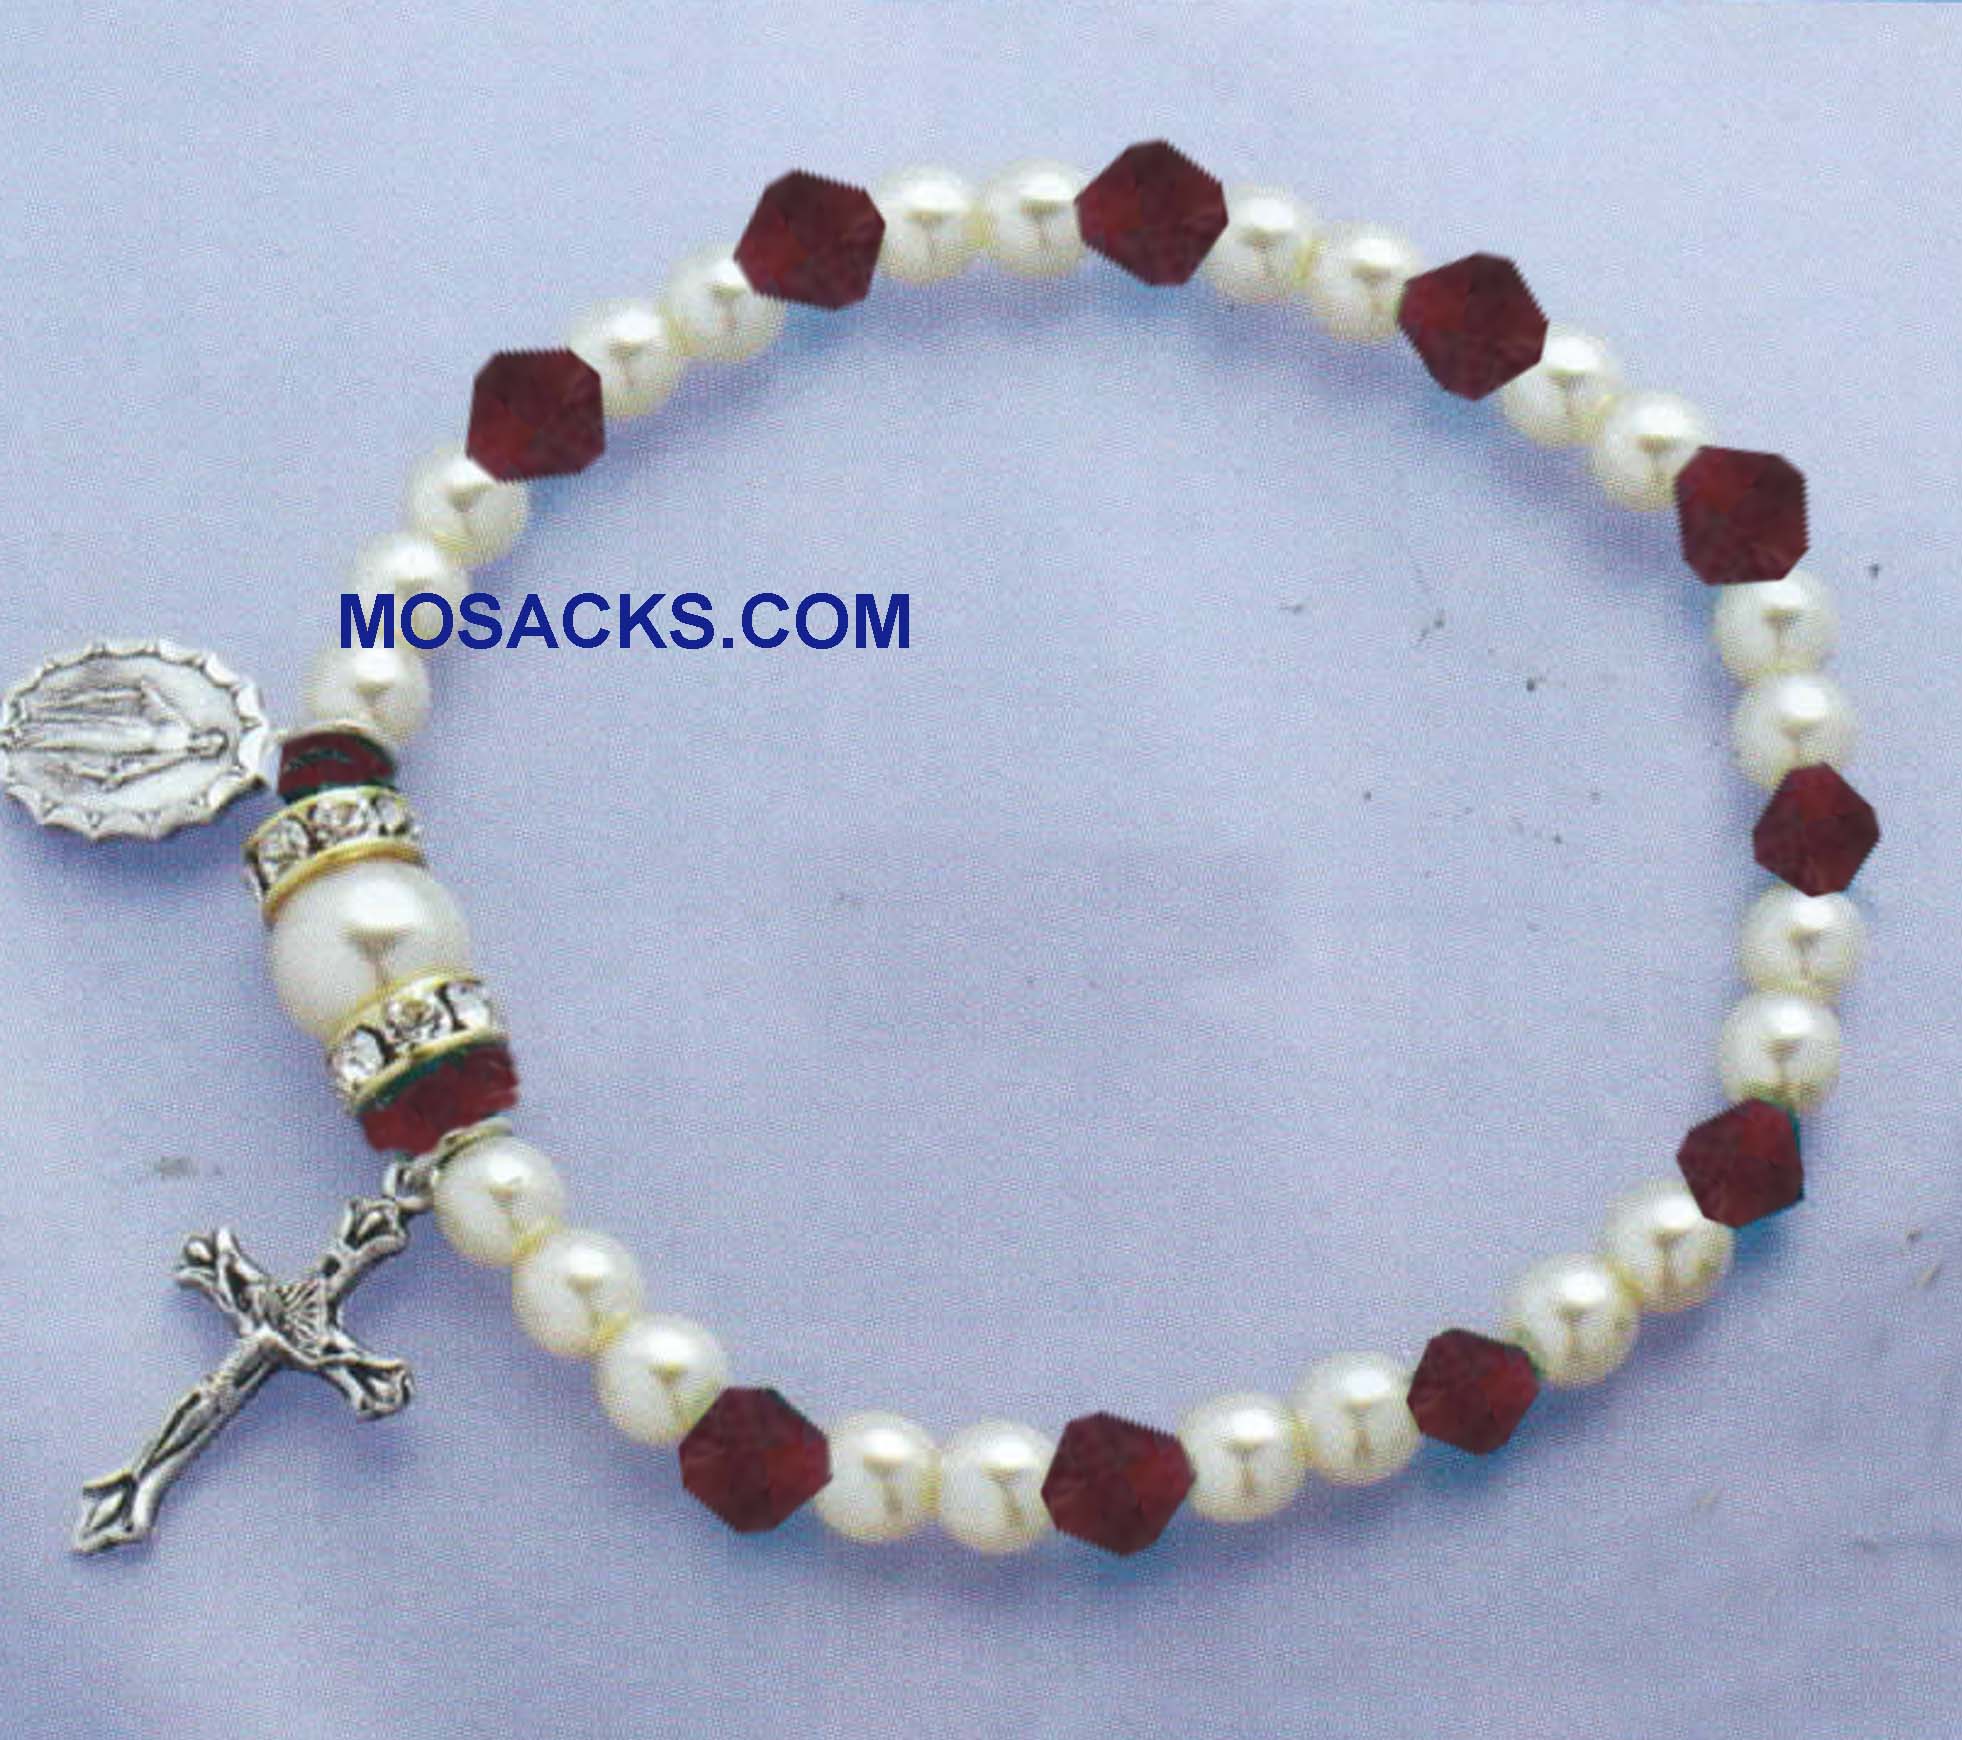 July Birthstone Rosary Stretch Bracelet Ruby – 45280RB Ruby One Decade Rosary Bracelet for July